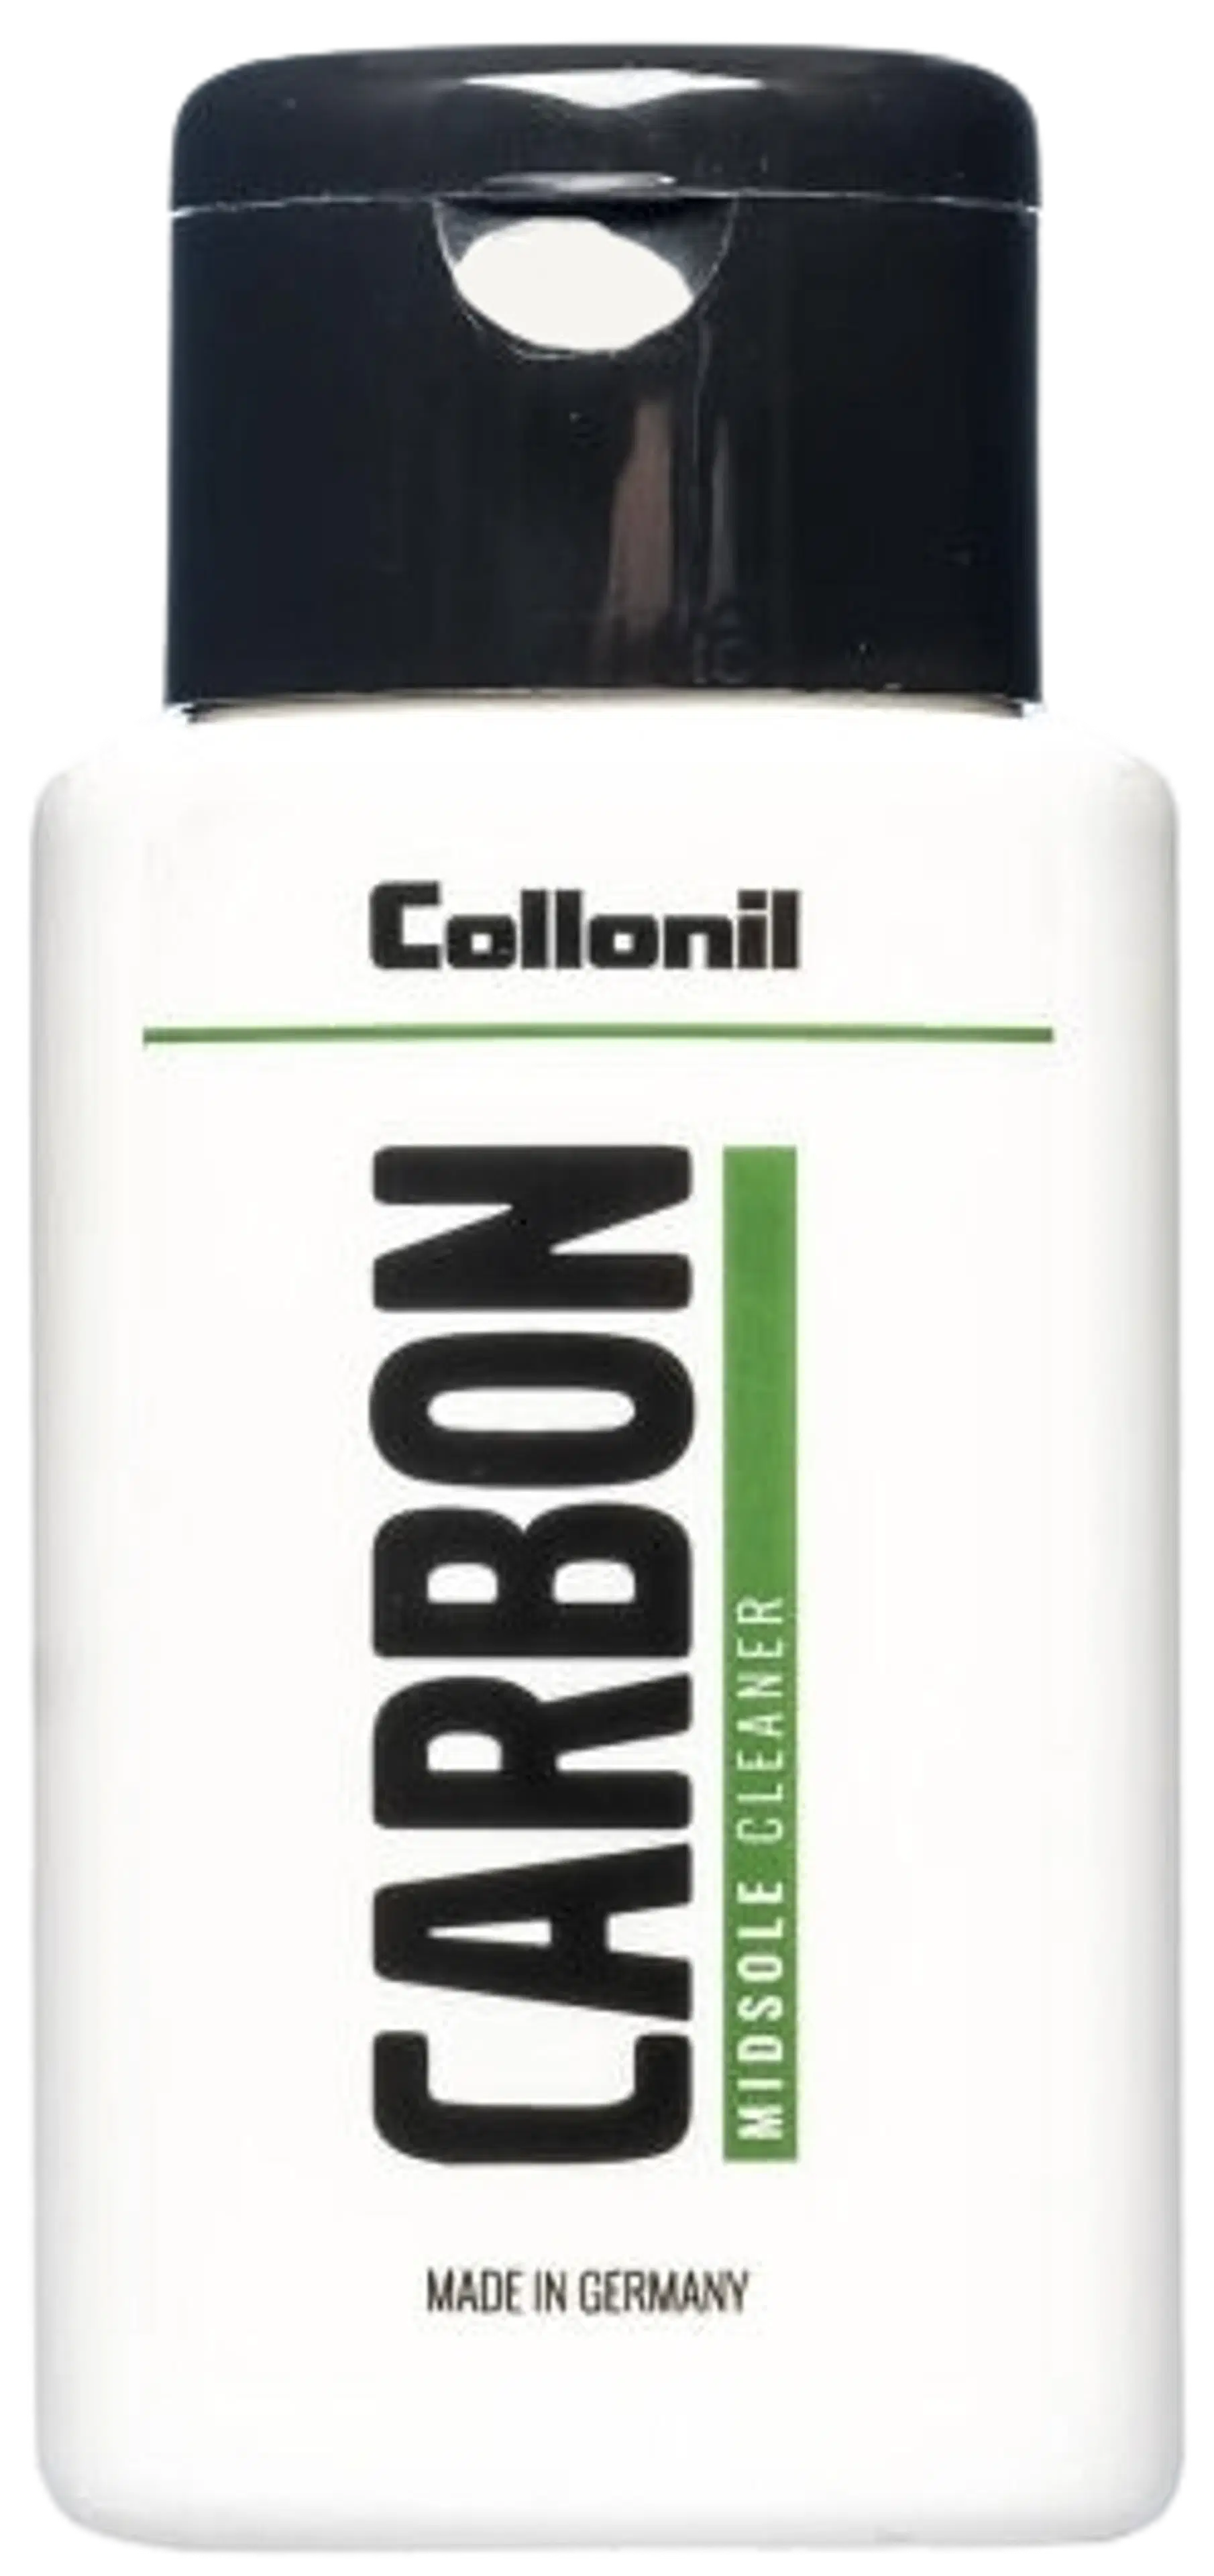 Collonil Carbon midsole cleaner 100ml